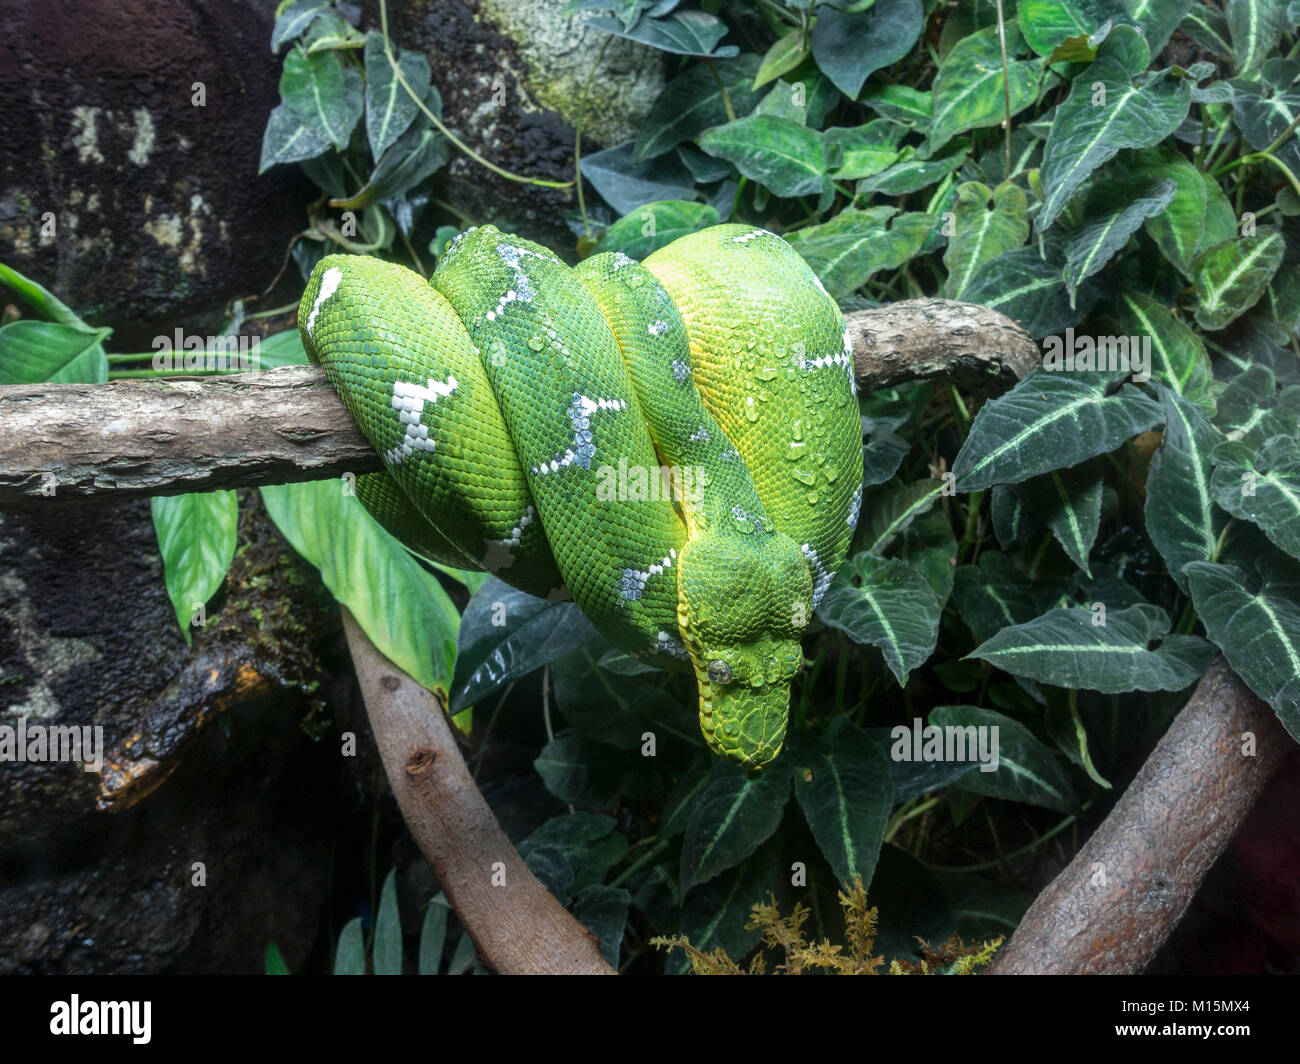 Emerald tree boa on display in the National Aquarium, Baltimore, Maryland, United States. Stock Photo